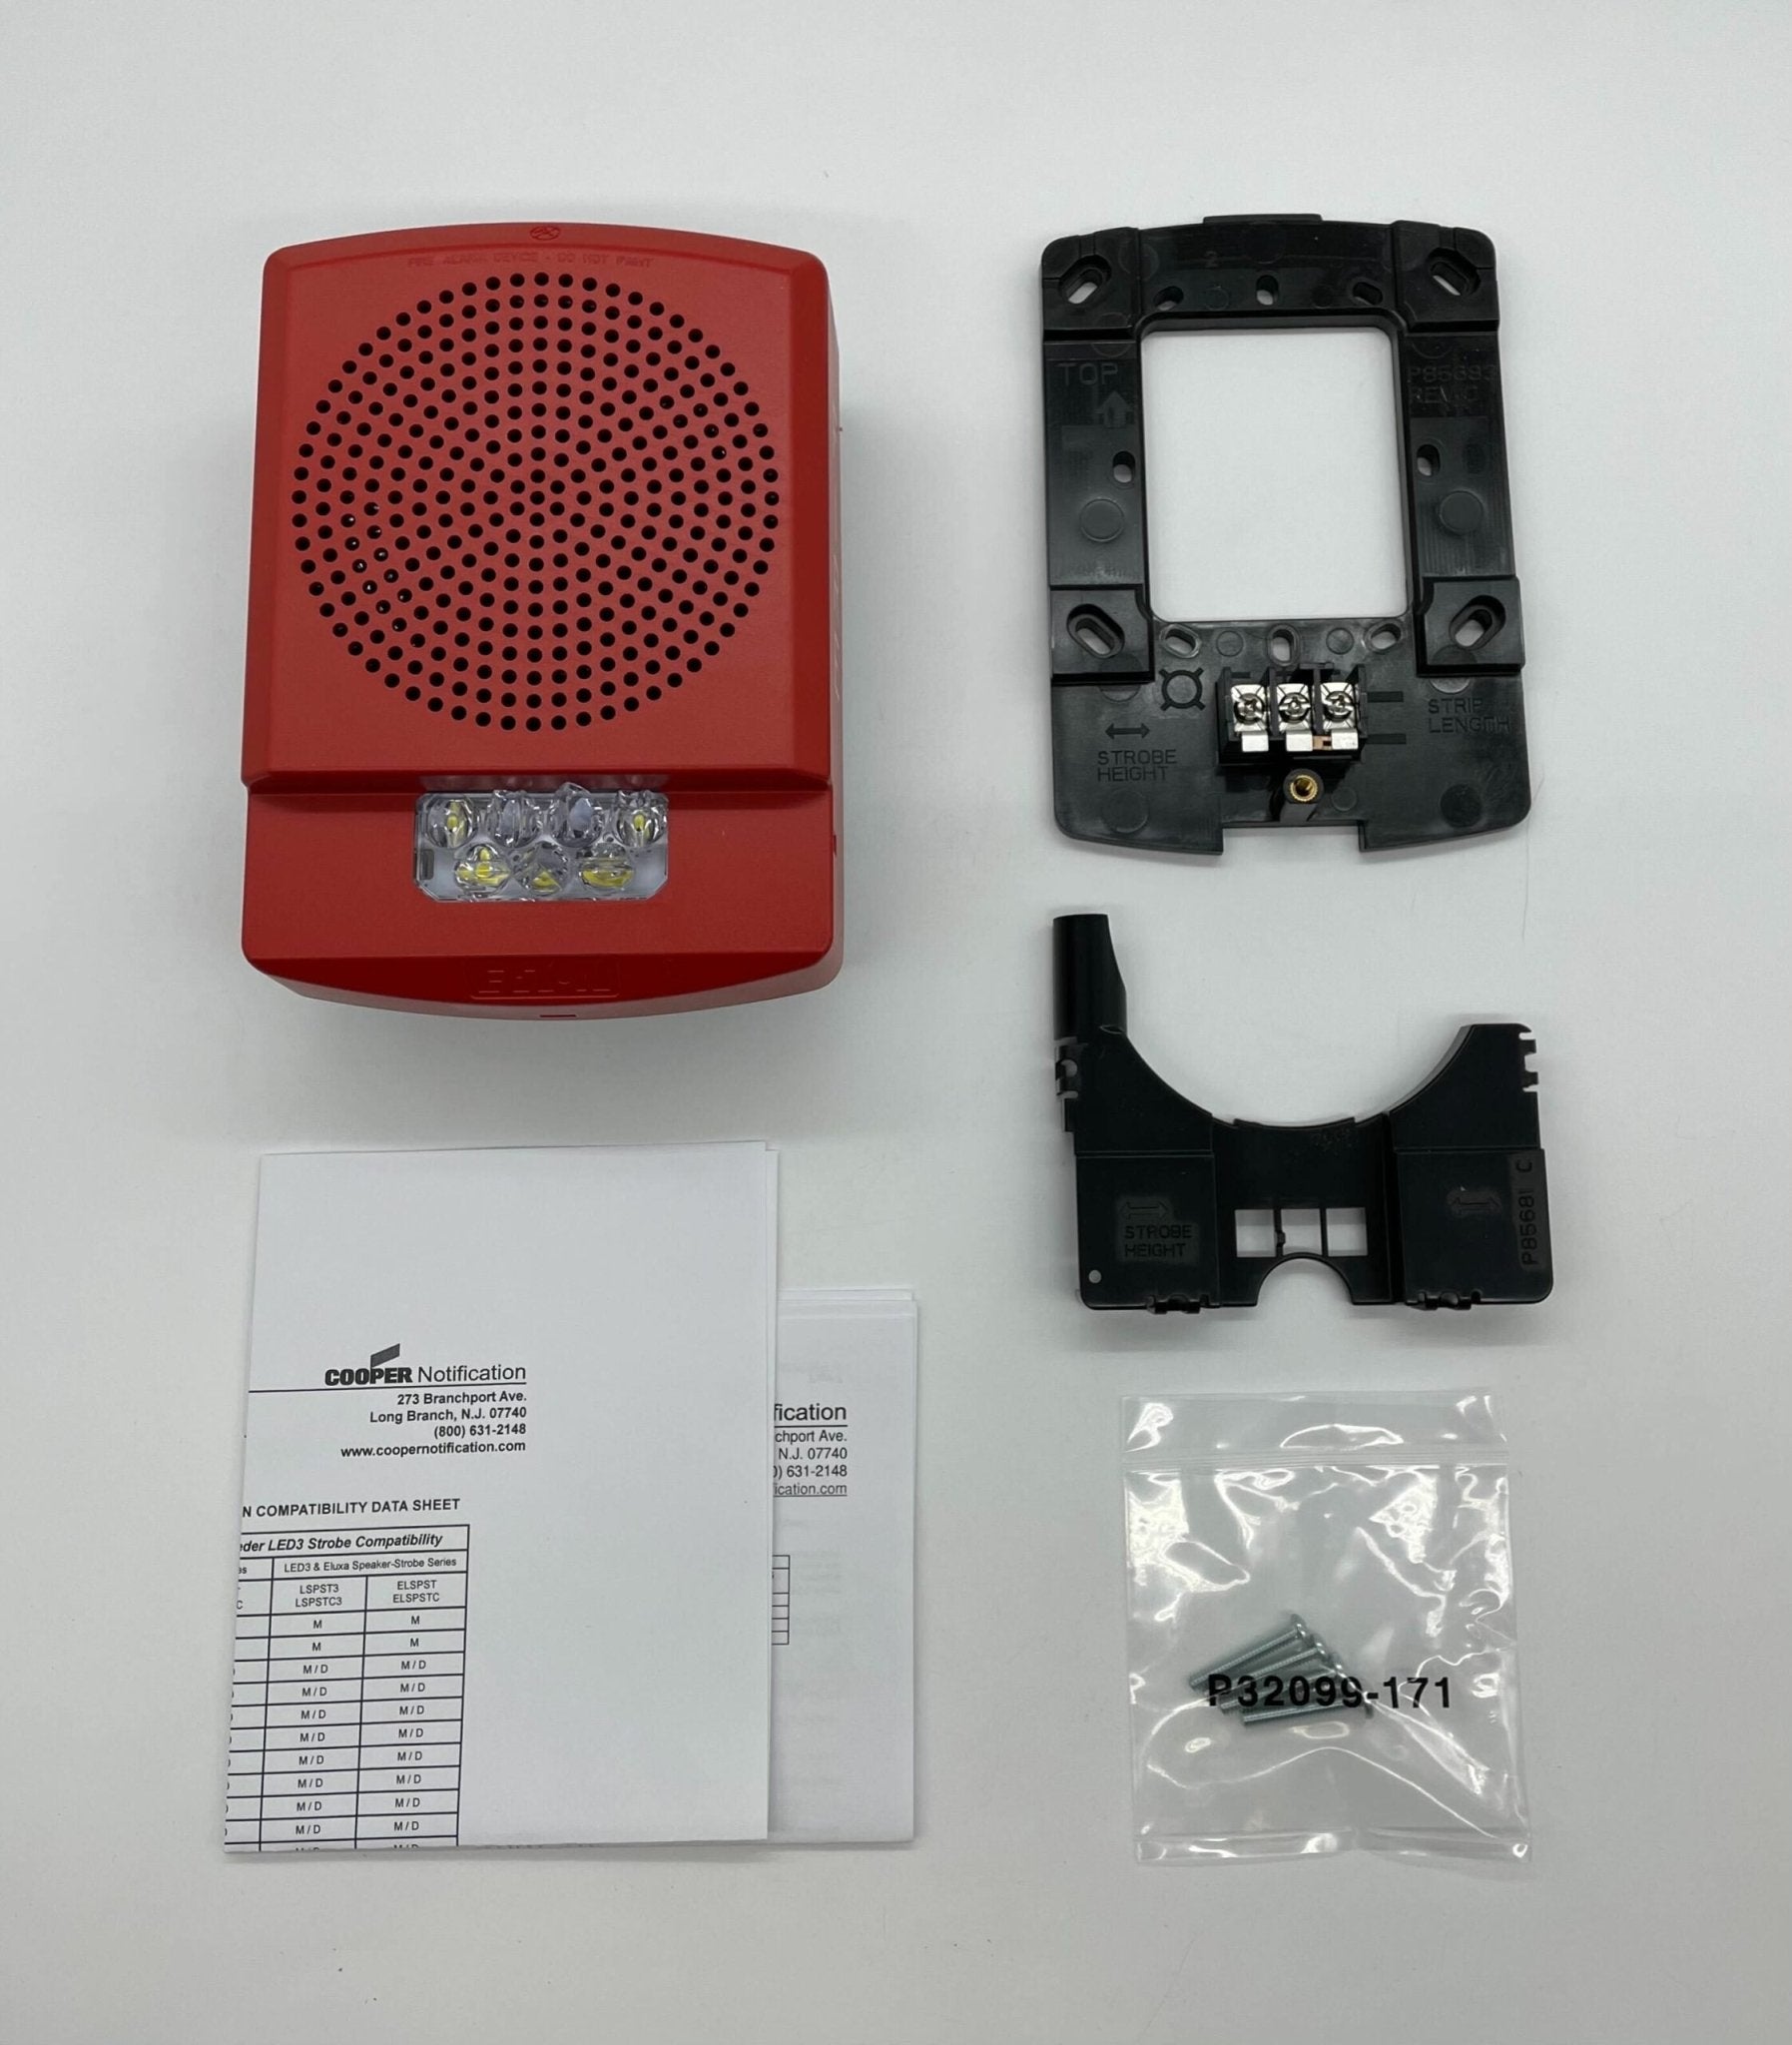 Wheelock ELFHSR - The Fire Alarm Supplier